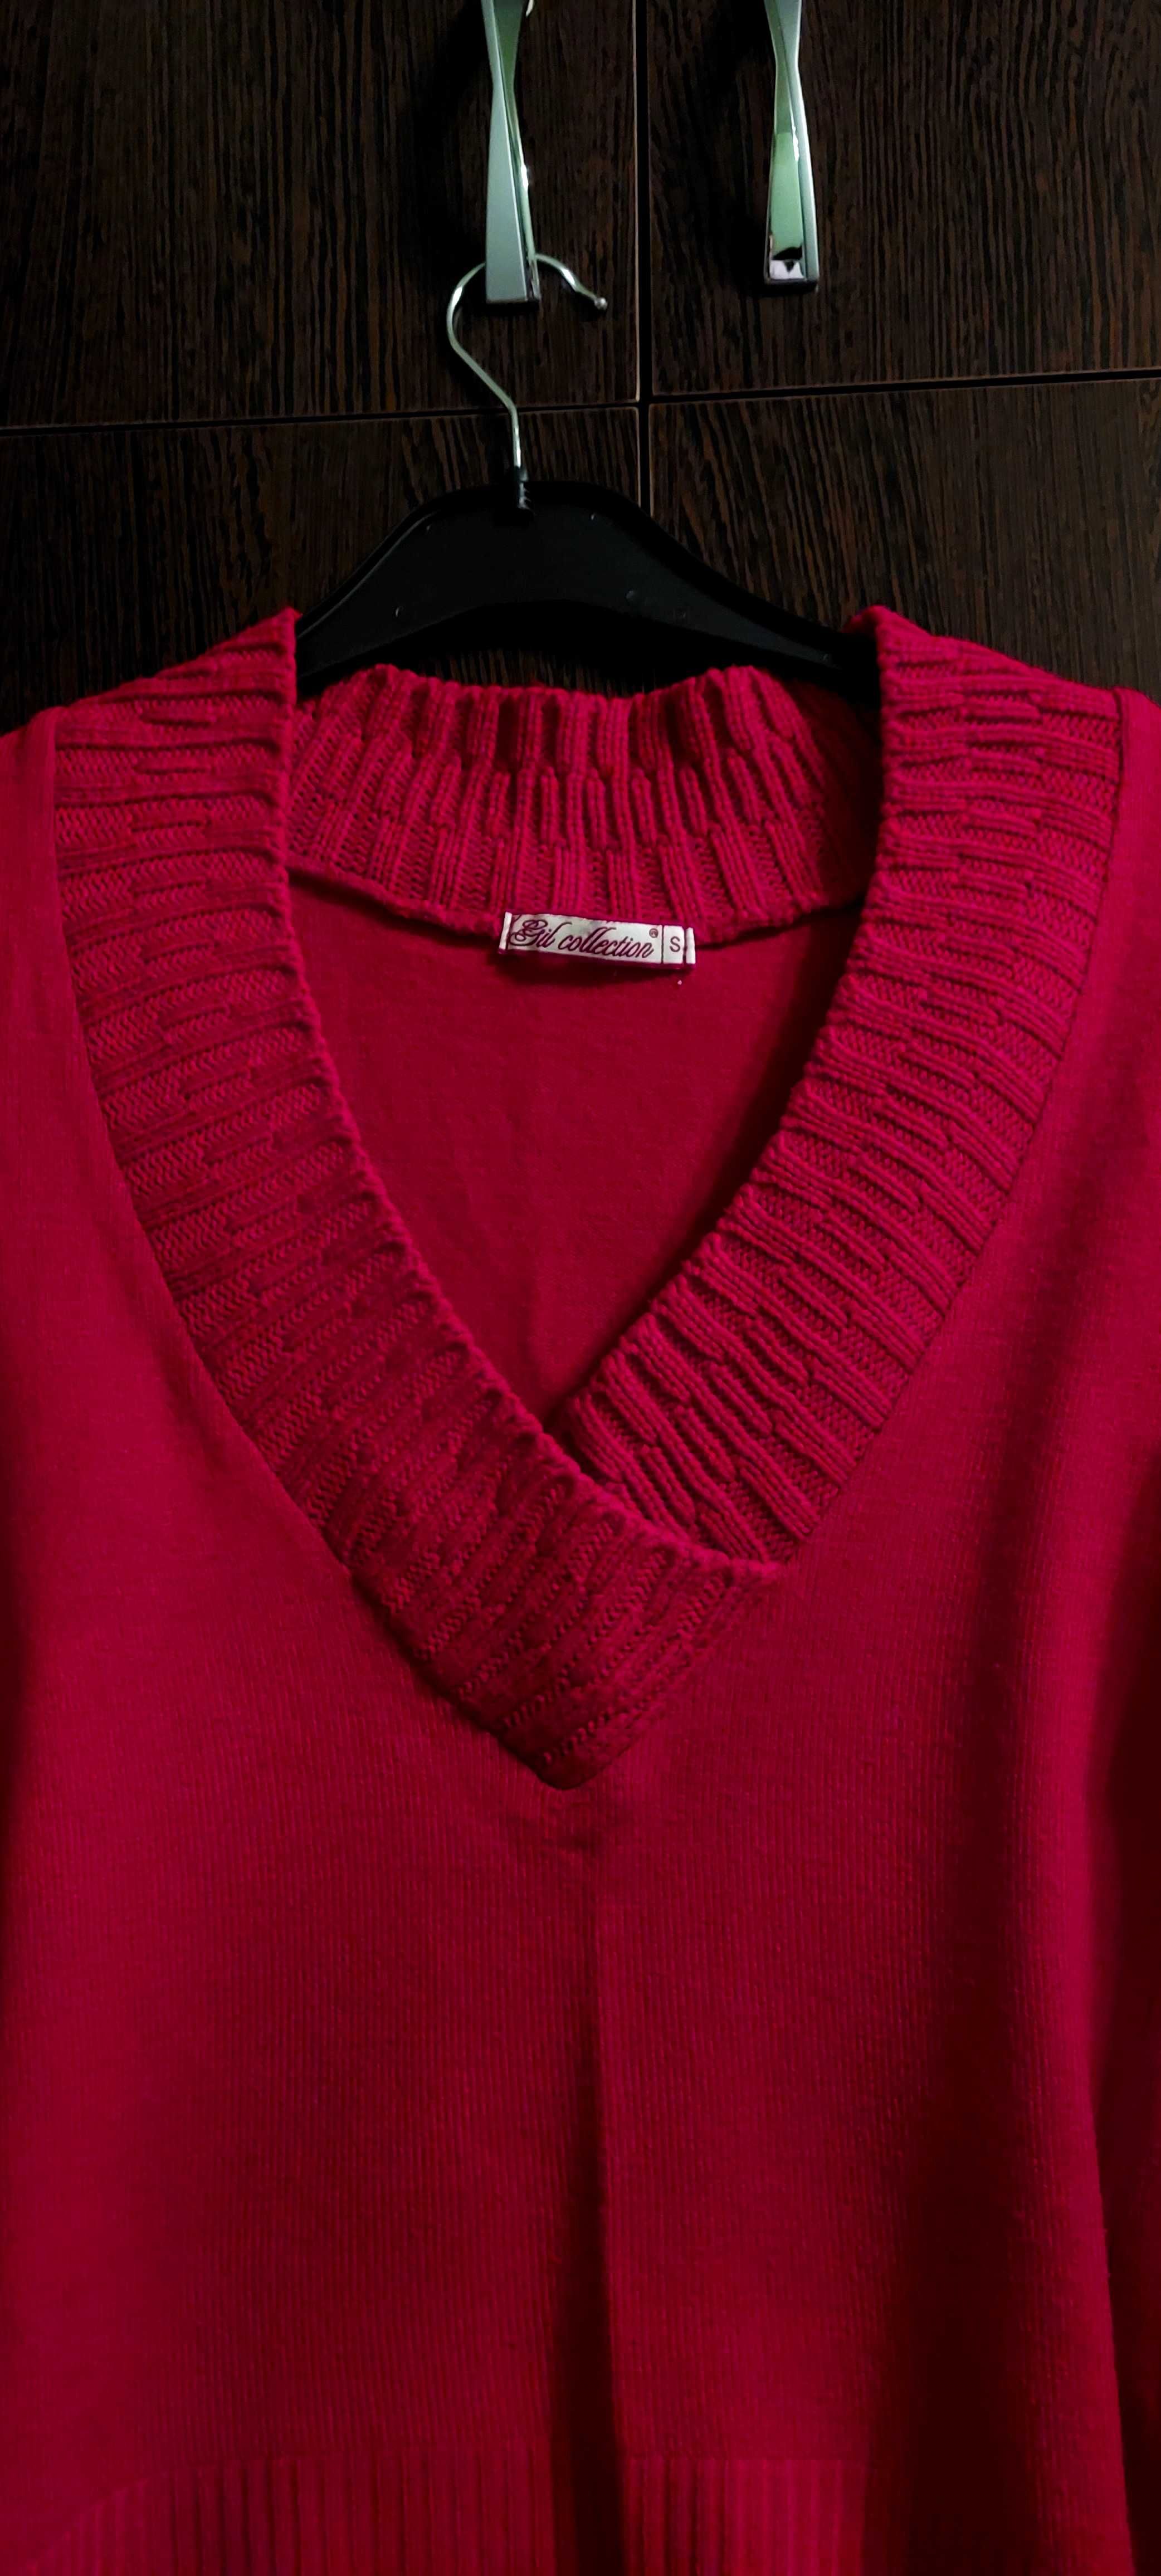 Vând pulover roșu + bonus fustâ blugi